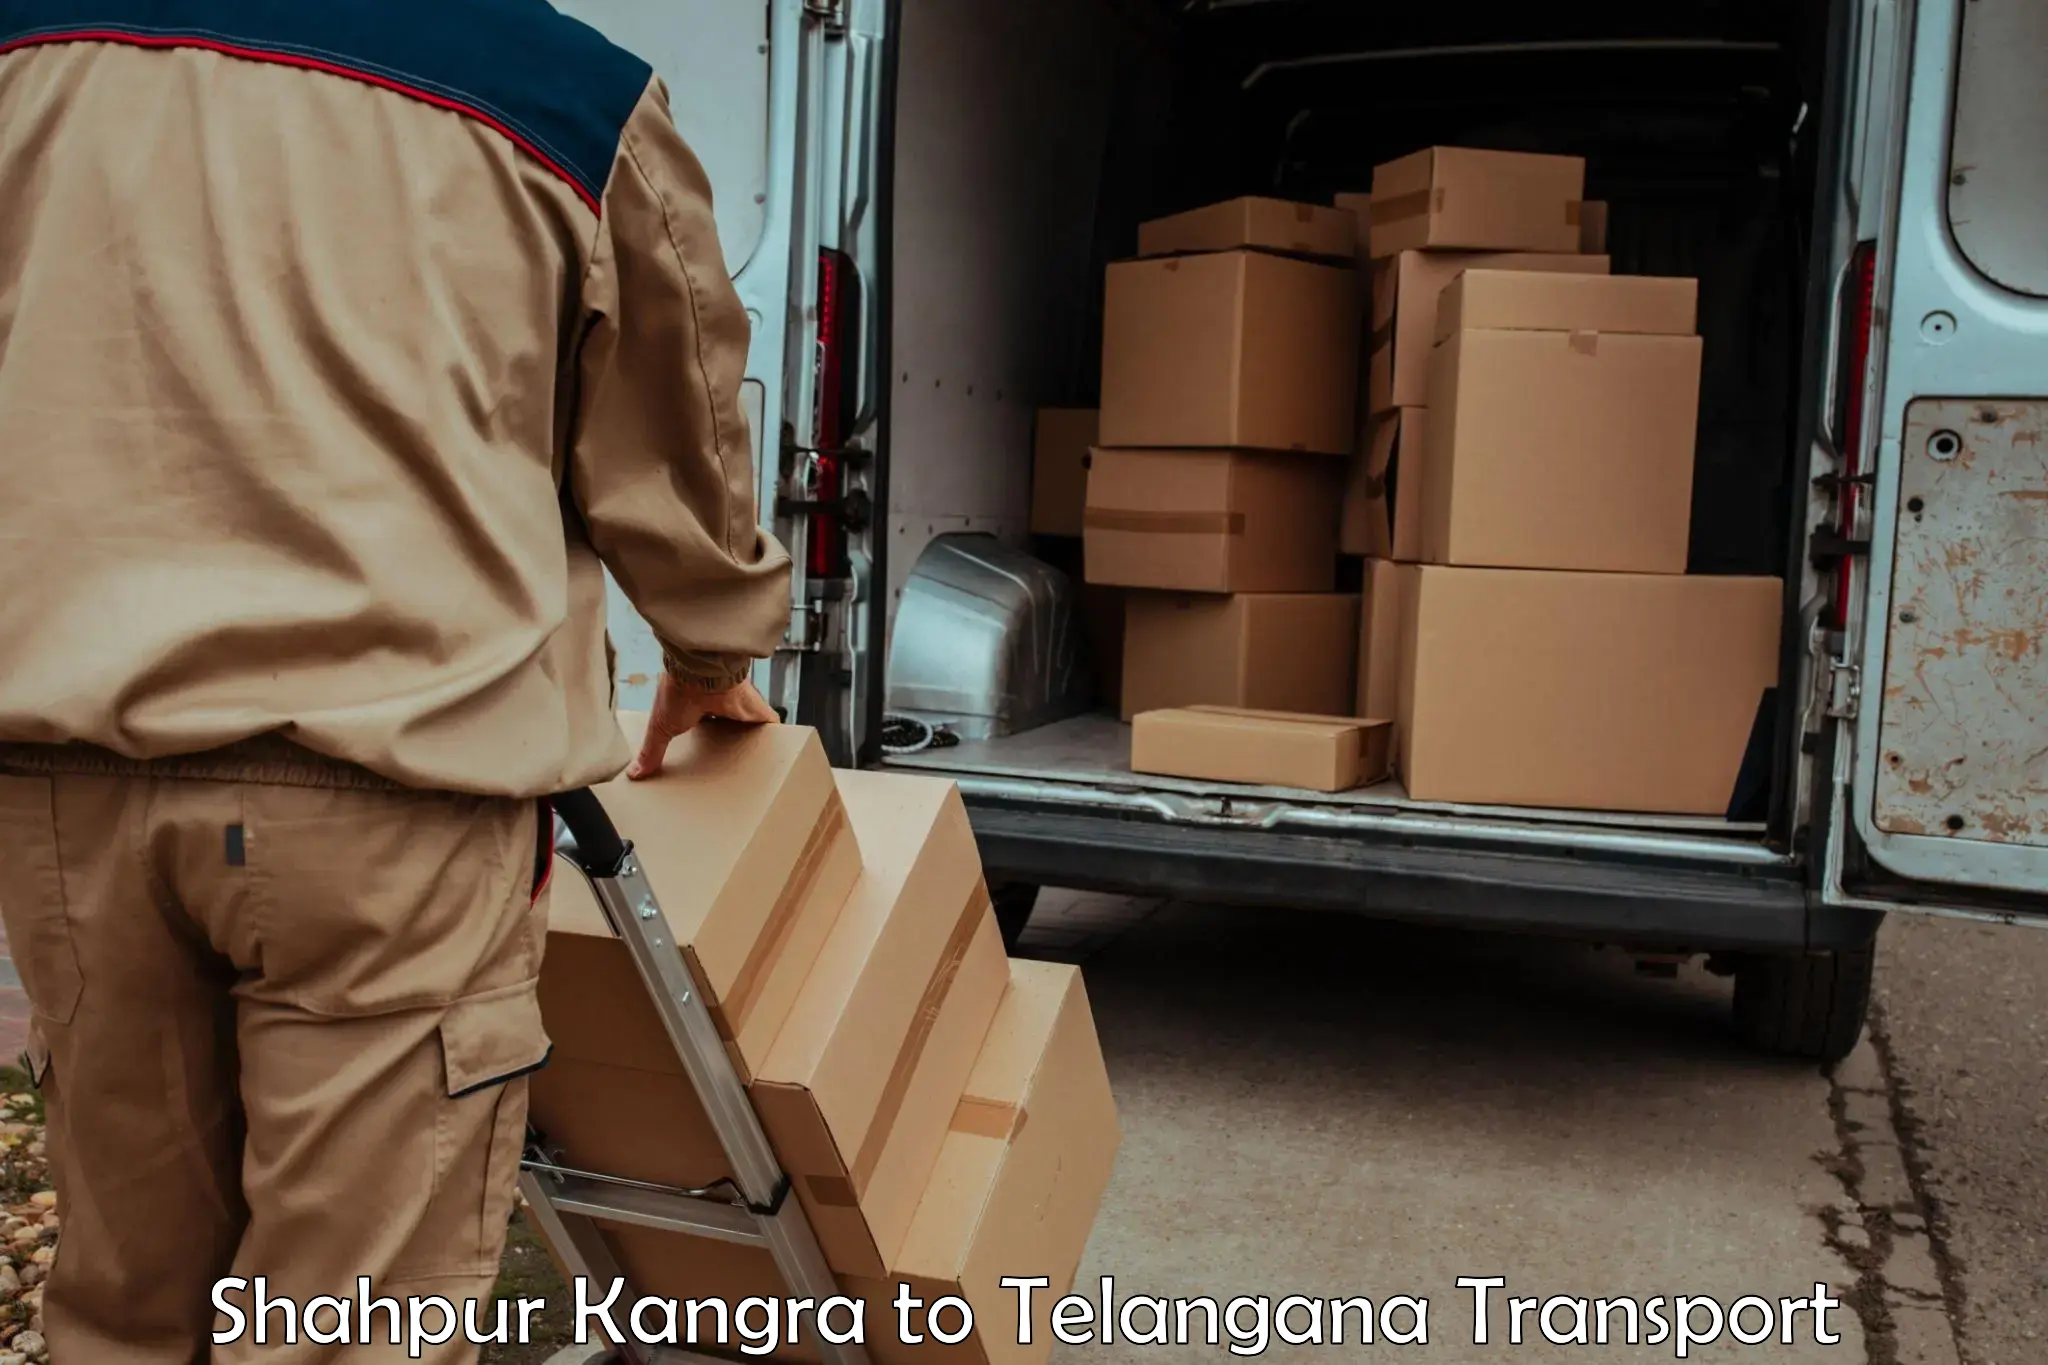 Truck transport companies in India Shahpur Kangra to Bhainsa